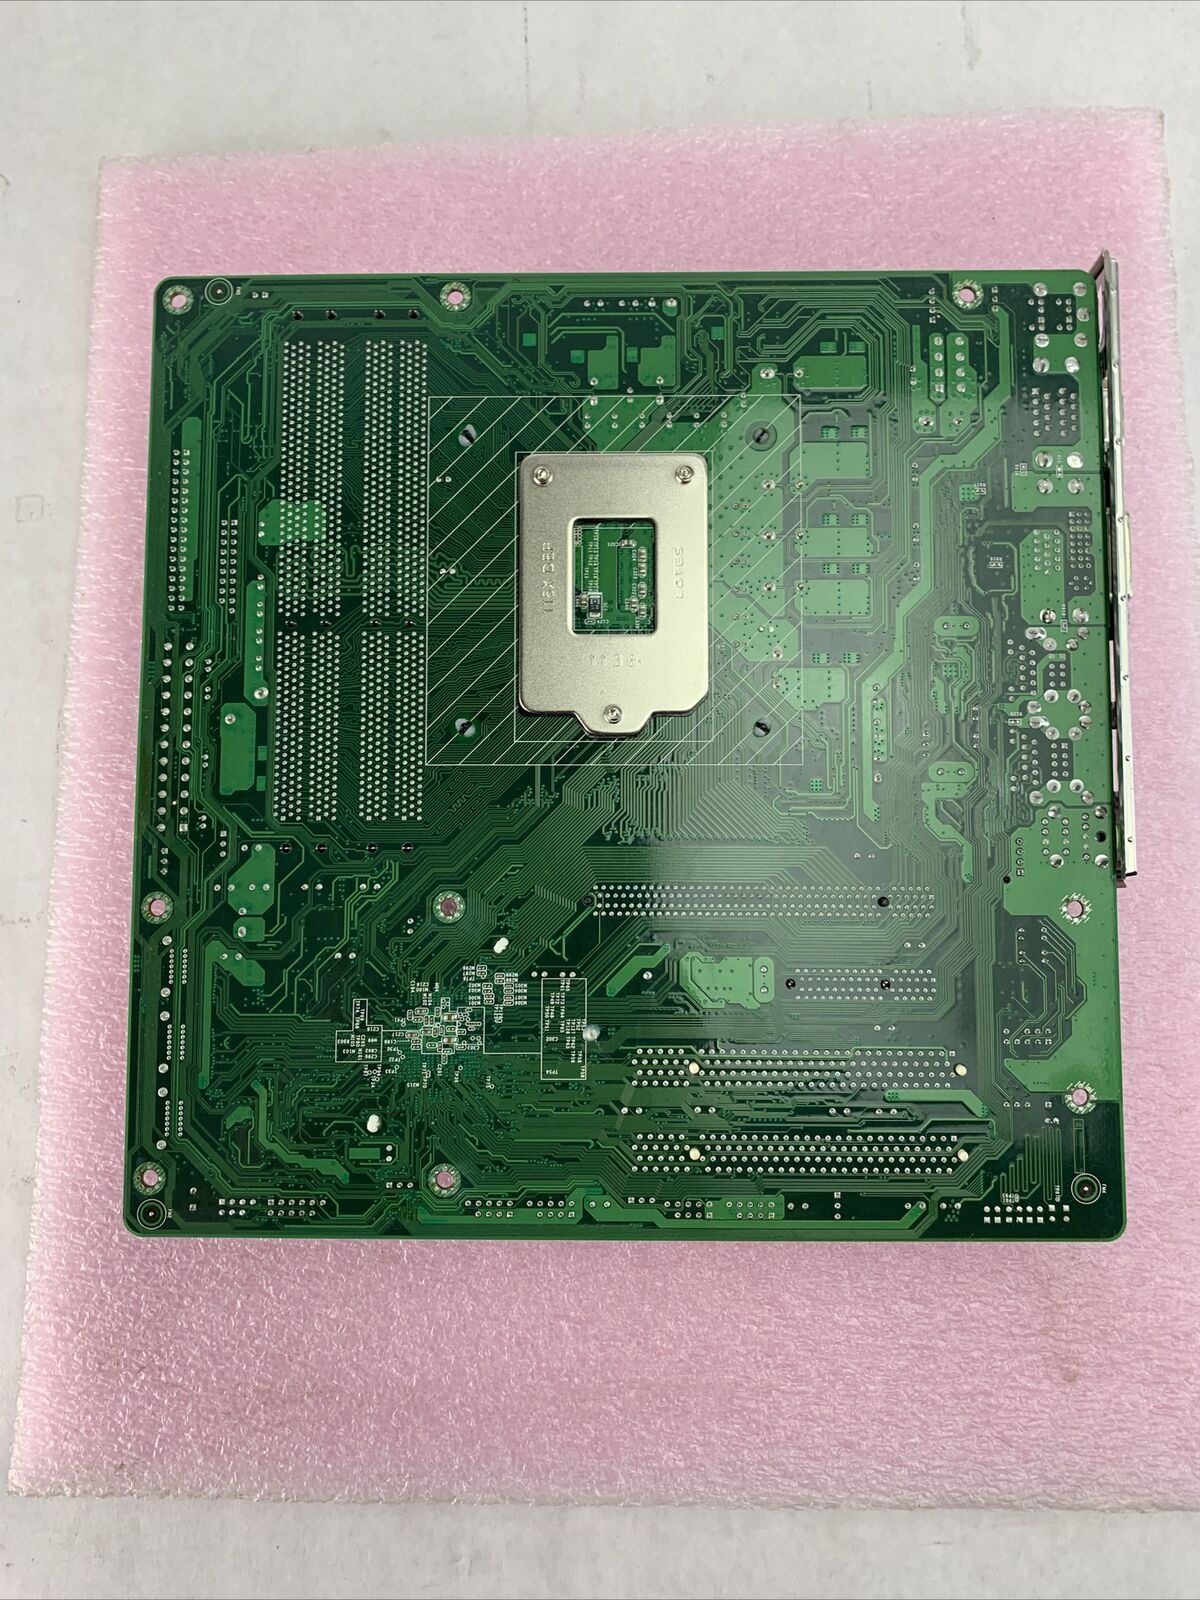 DFI PT330 Motherboard Intel Core i5-650 3.2GHz 4GB RAM w/ I/O Shield